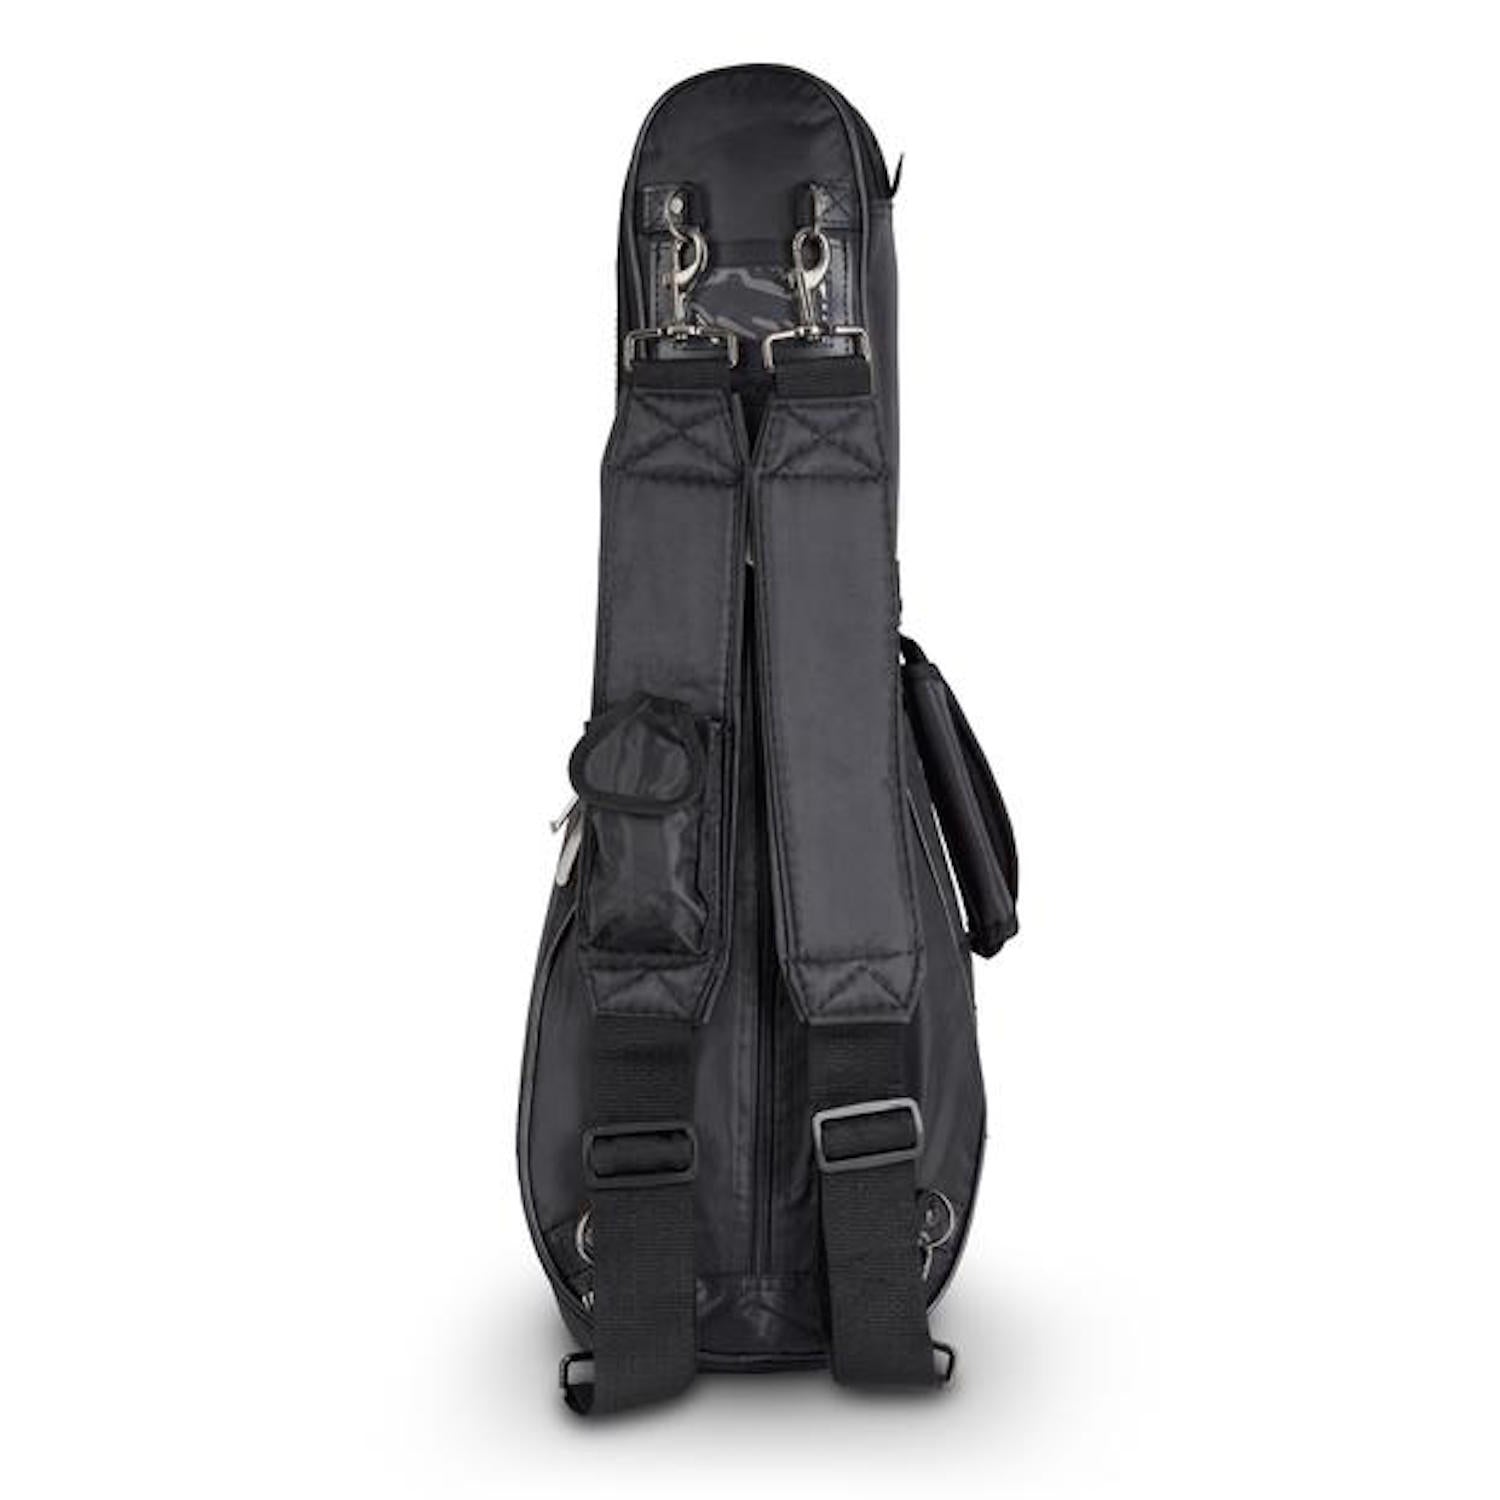 Rockbag Premium Plus Roundback Mandolin Gig Bag